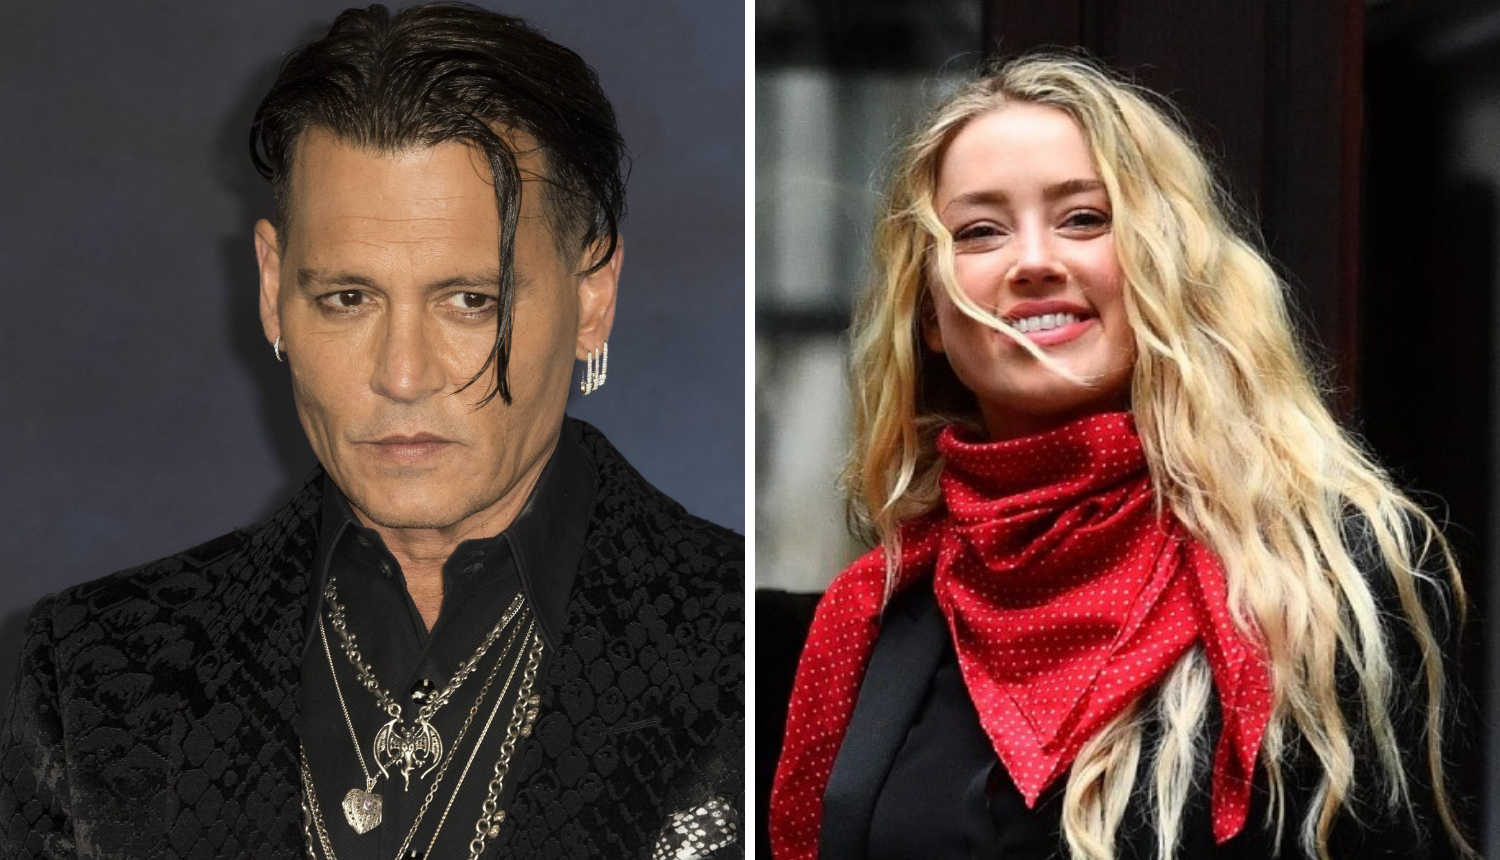 Johnny Depp: 'Hollywood me bojkotira zbog rastave s Amber'